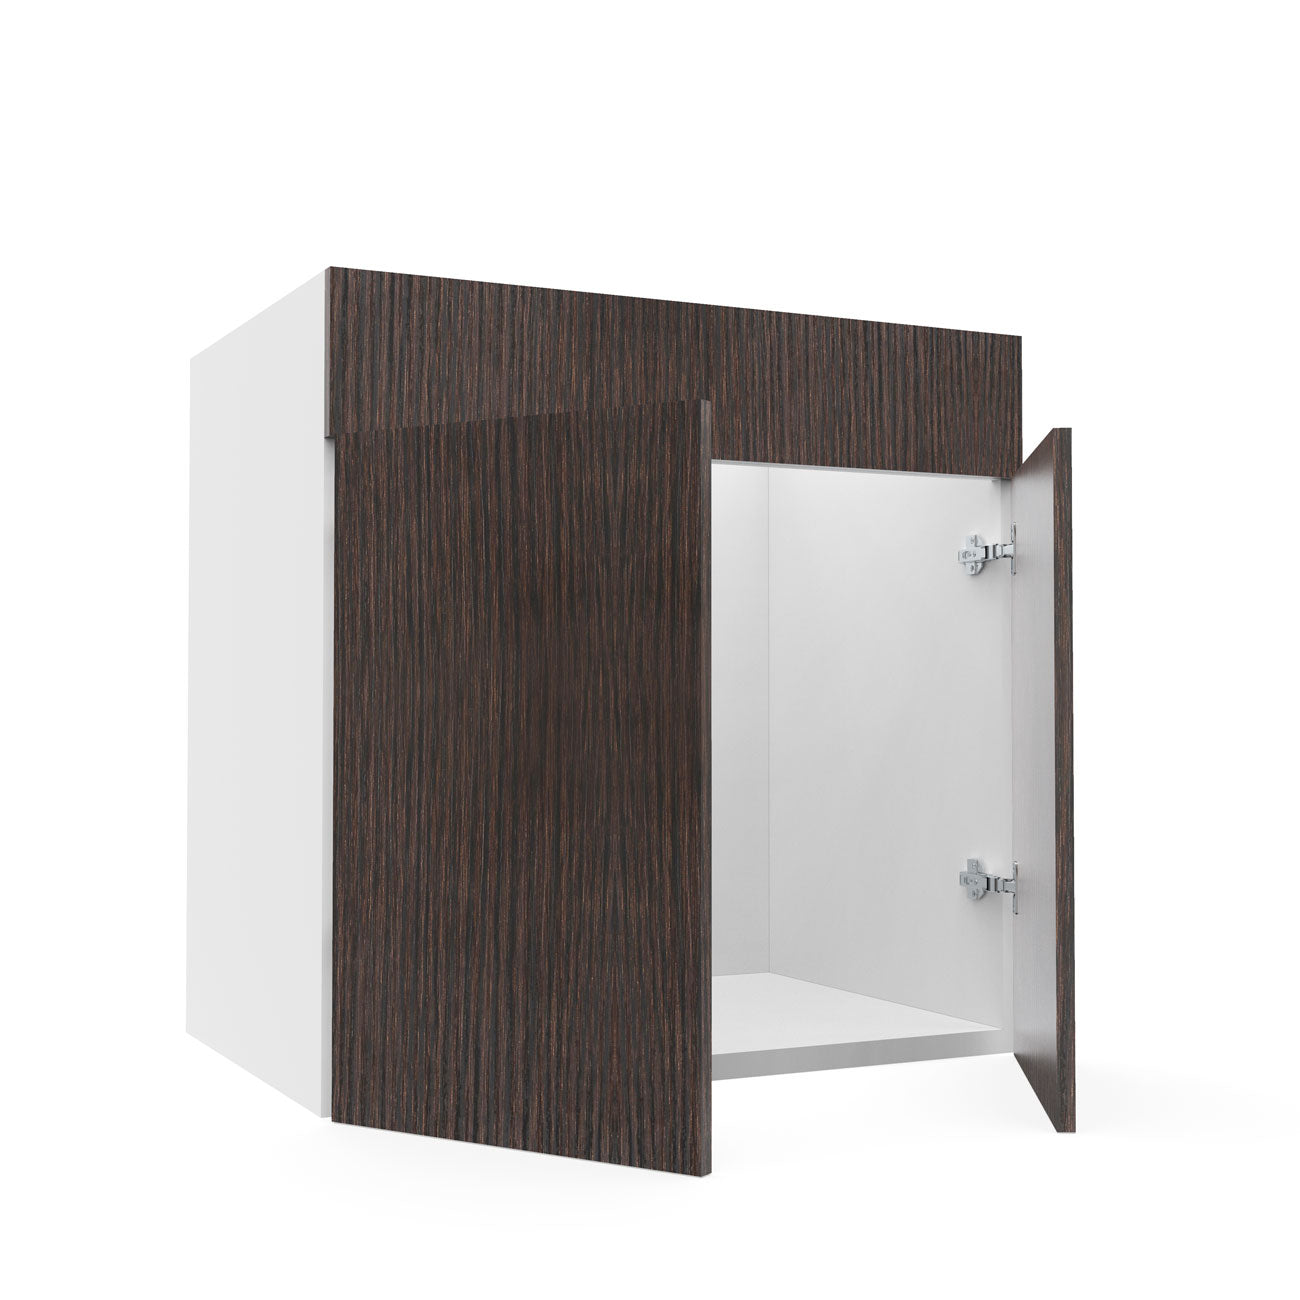 RTA - Brown Oak - Sink Vanity Cabinets | 30"W x 30"H x 21"D